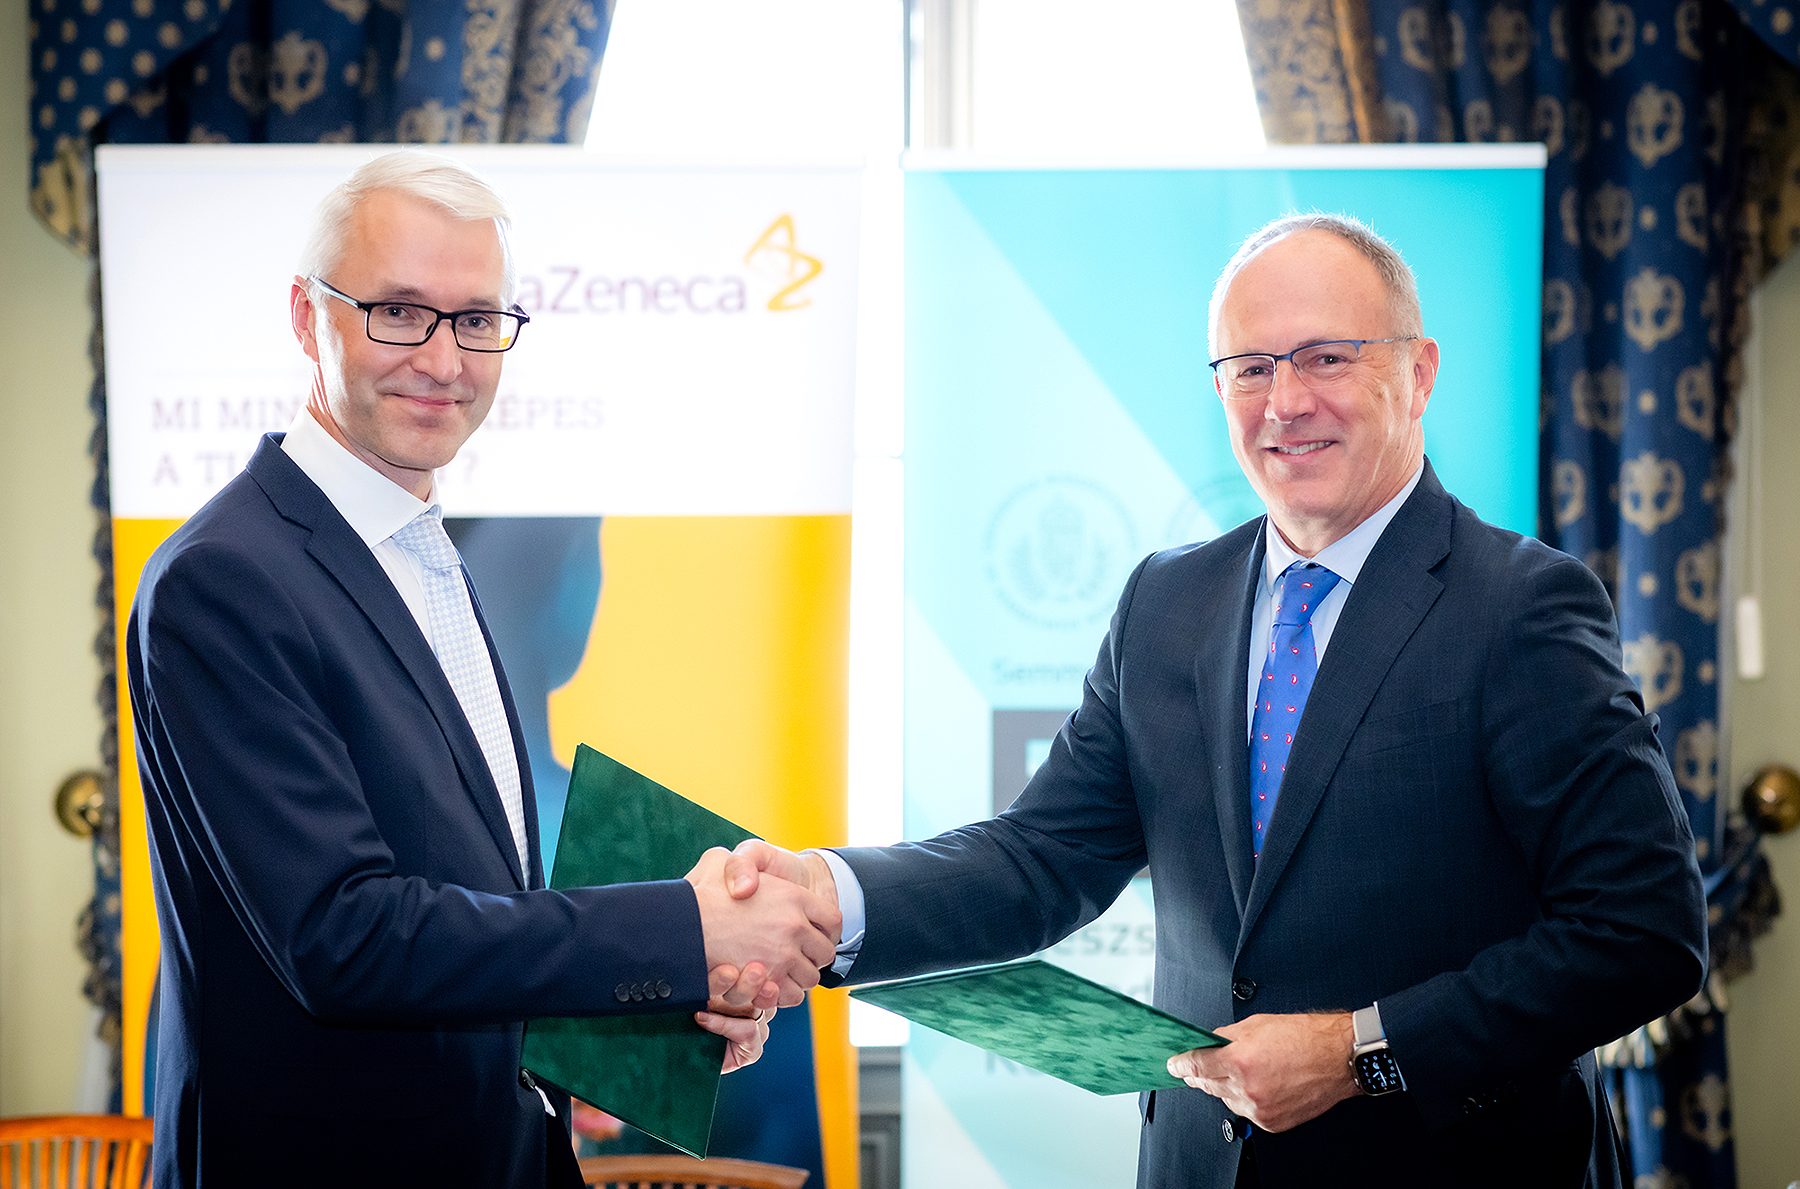 AstraZeneca, Semmelweis Uni Announce Strategic Collaboration